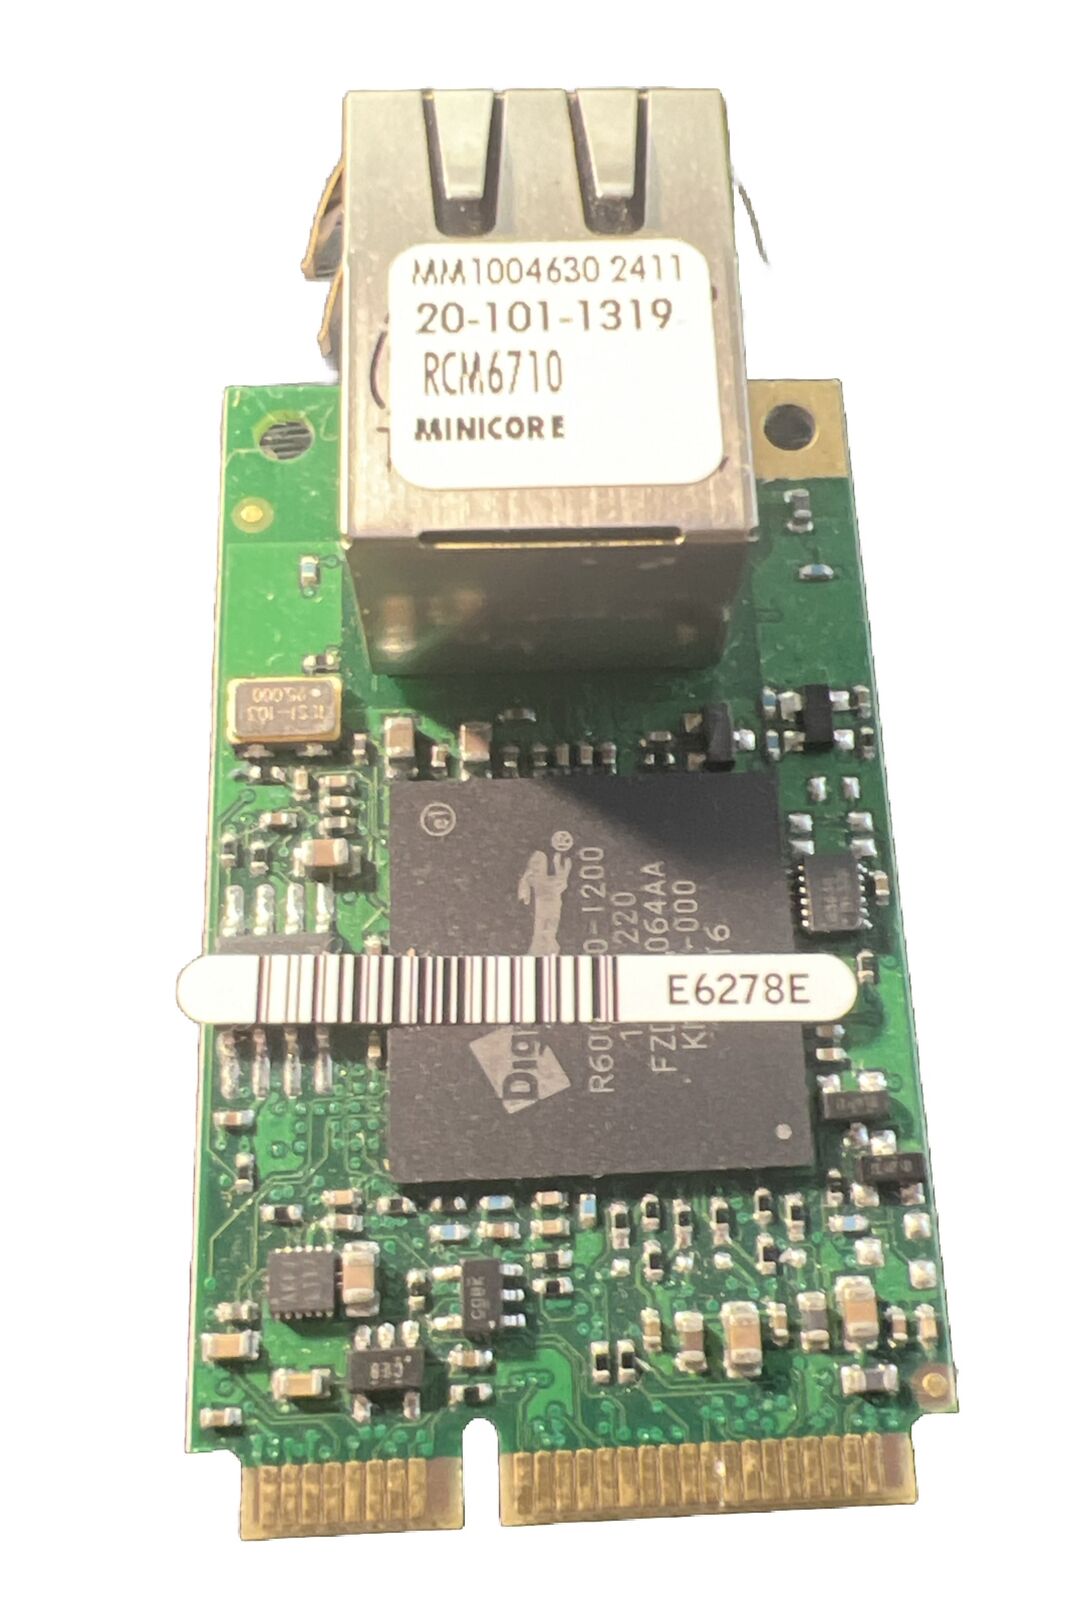 Rabbit/Digi RCM6710 MiniCore Module Embedded Device Server **FREE SHIPPING**